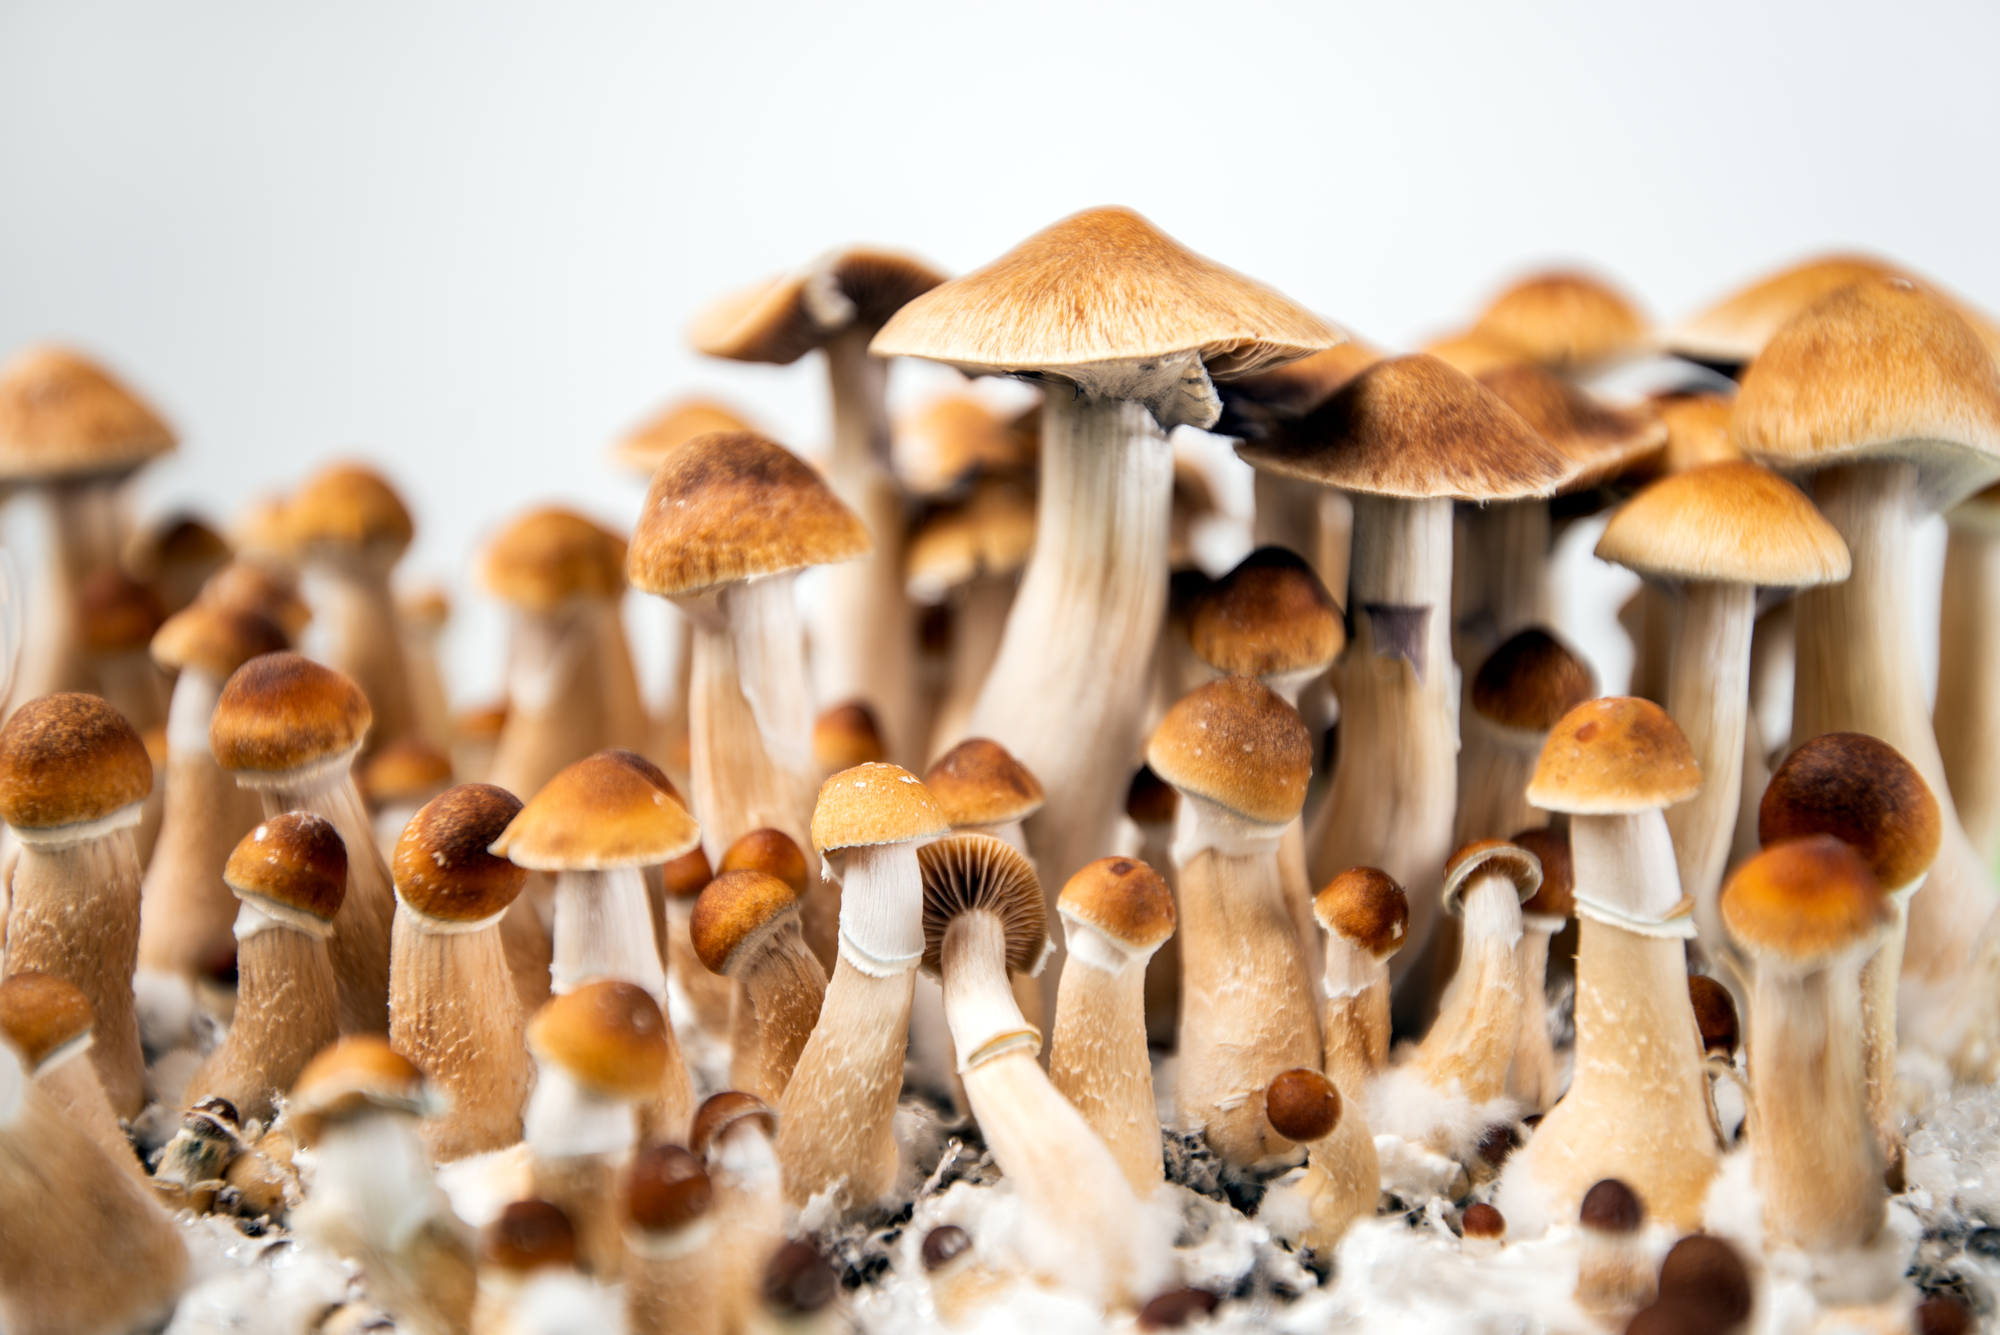 What are Penis Envy Mushrooms, penis envy mushroom, magic mushrooms, Penis envy magic mushrooms